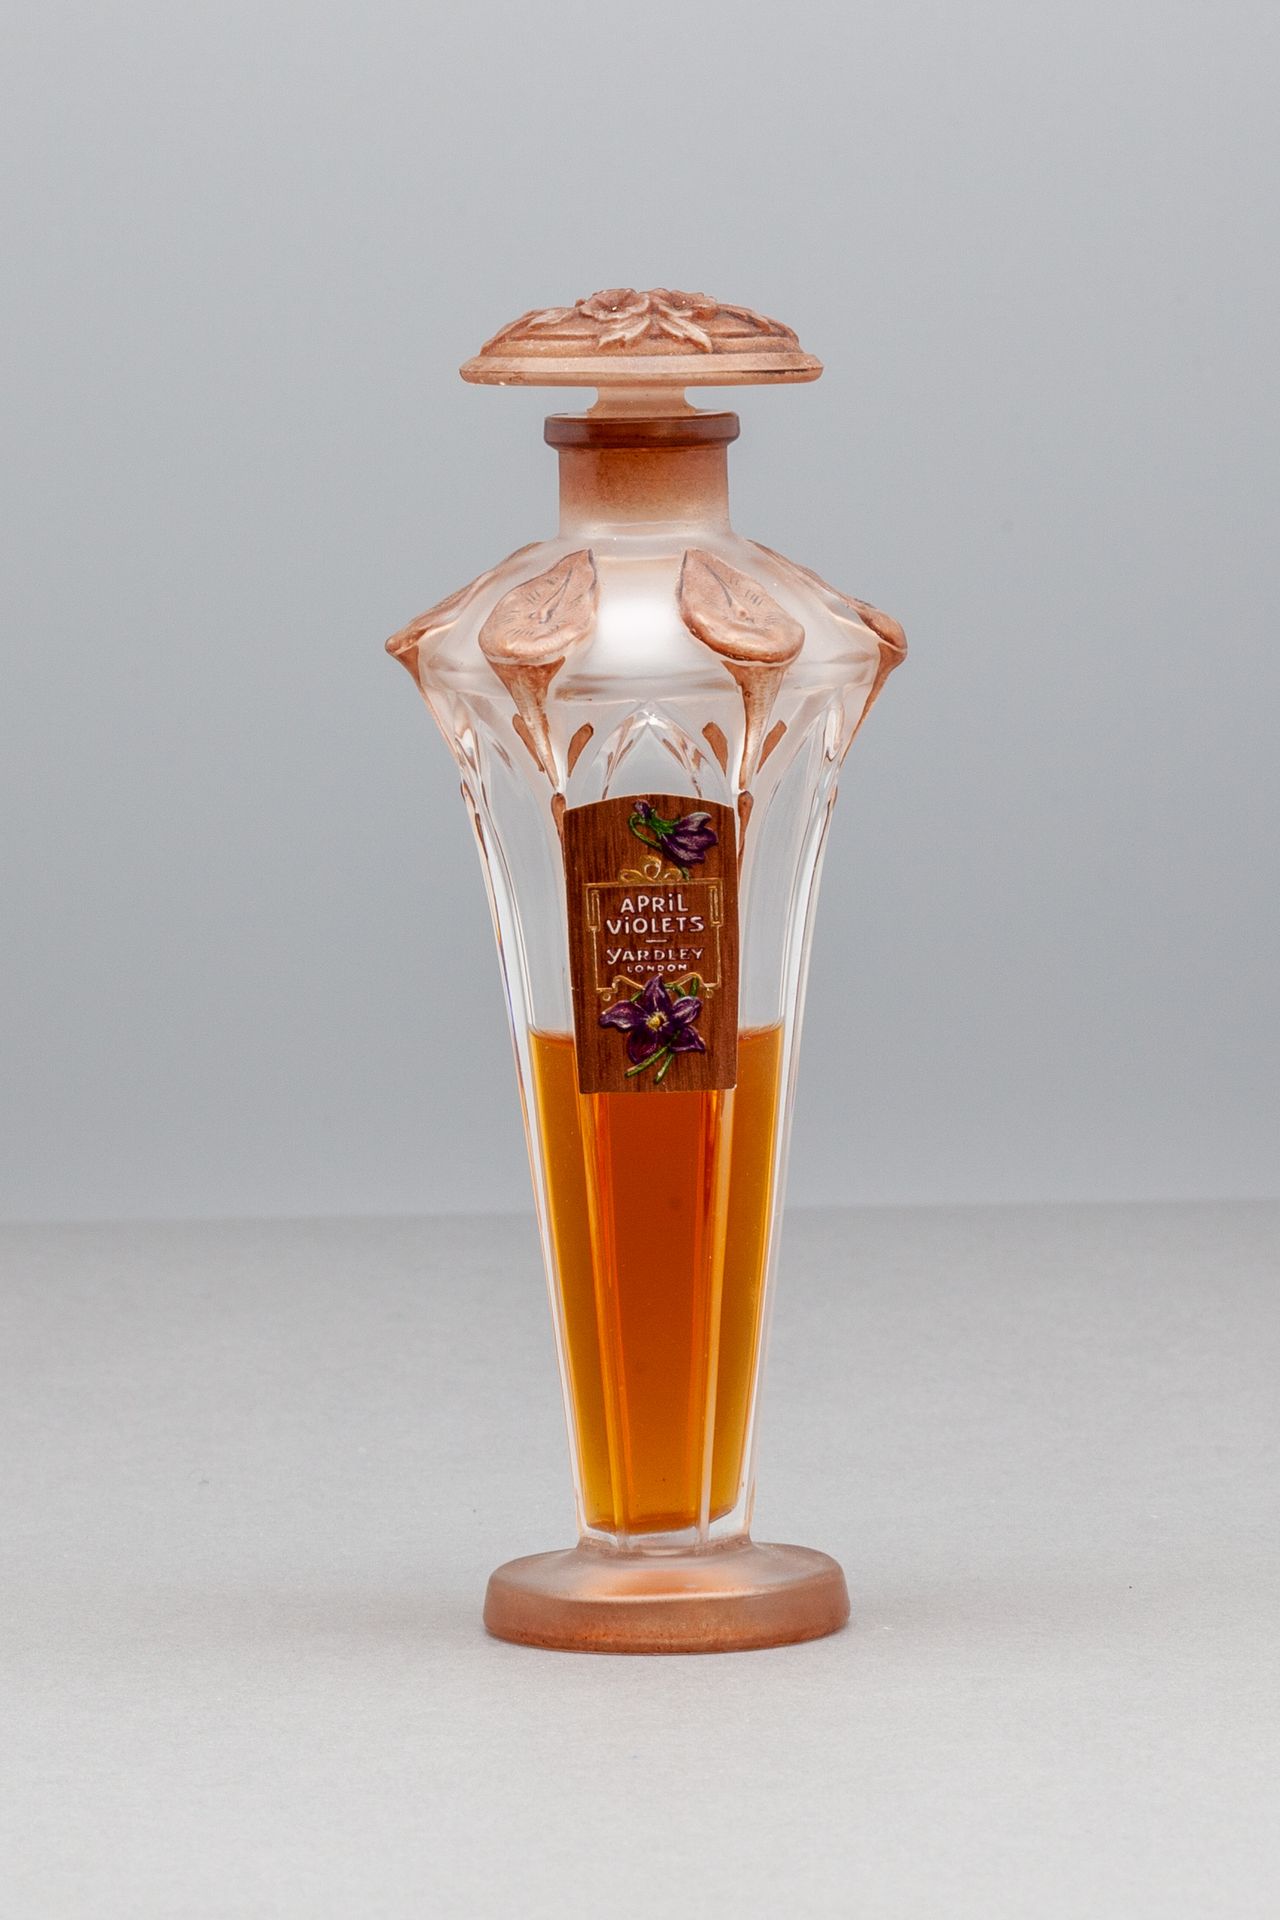 YARDLEY "APRIL VIOLETS" 喇叭形的玻璃瓶，瓶盖上有花纹装饰。标签名为：。